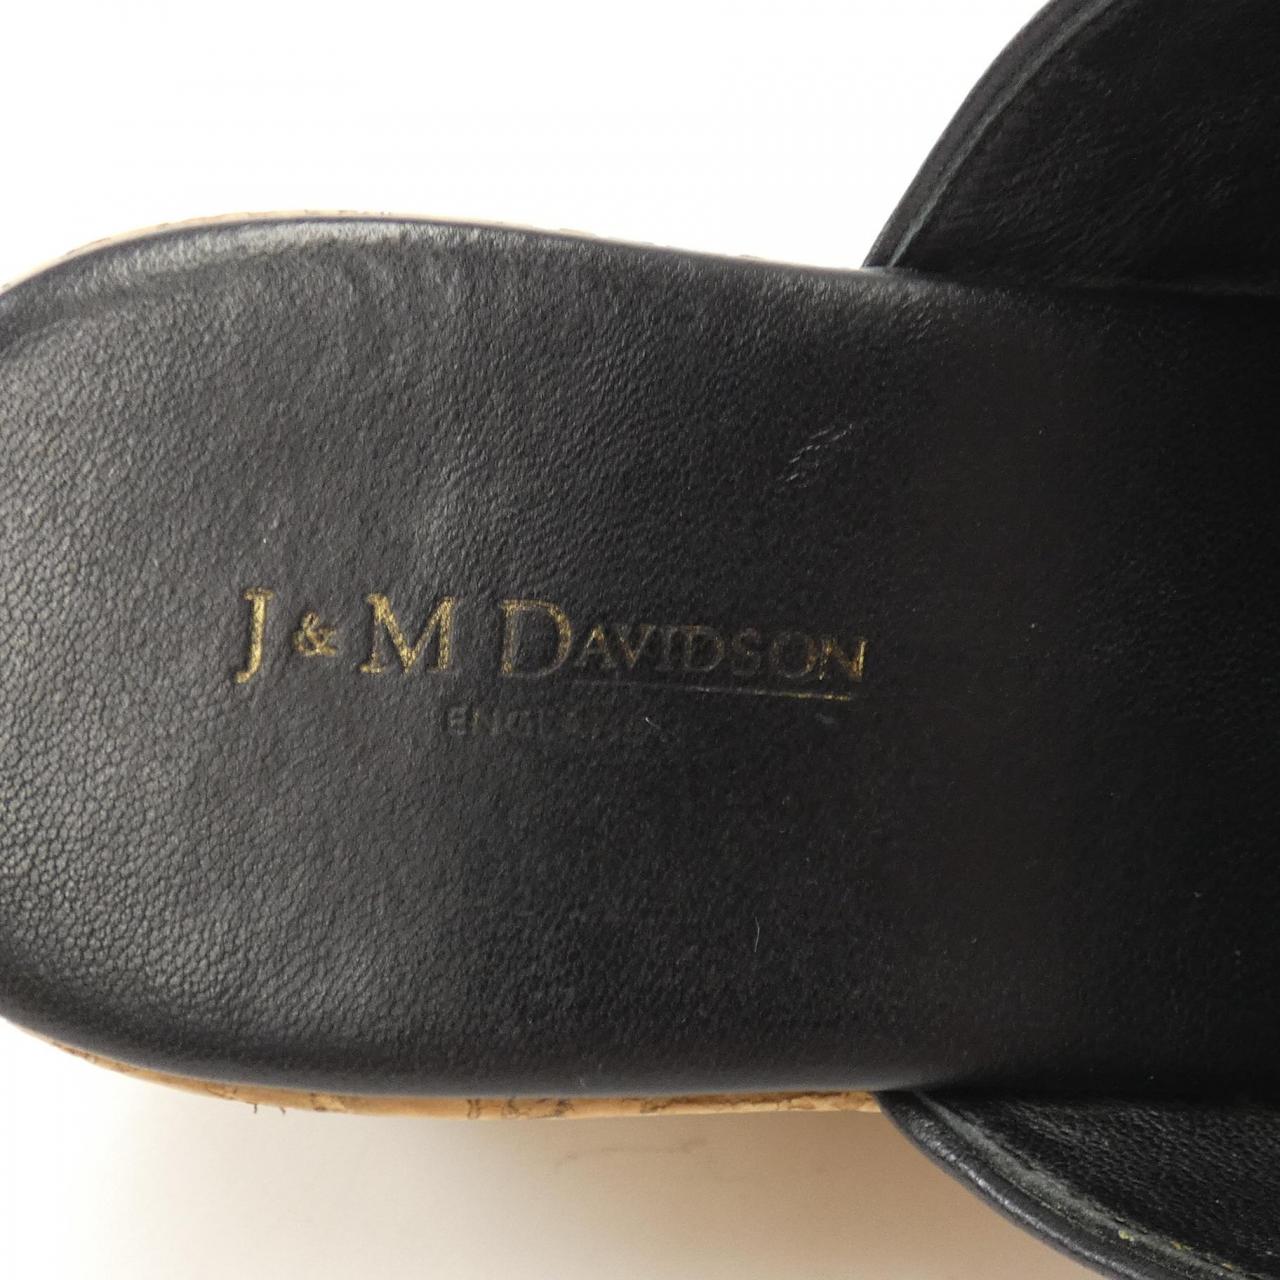 J&M DAVIDSON涼鞋